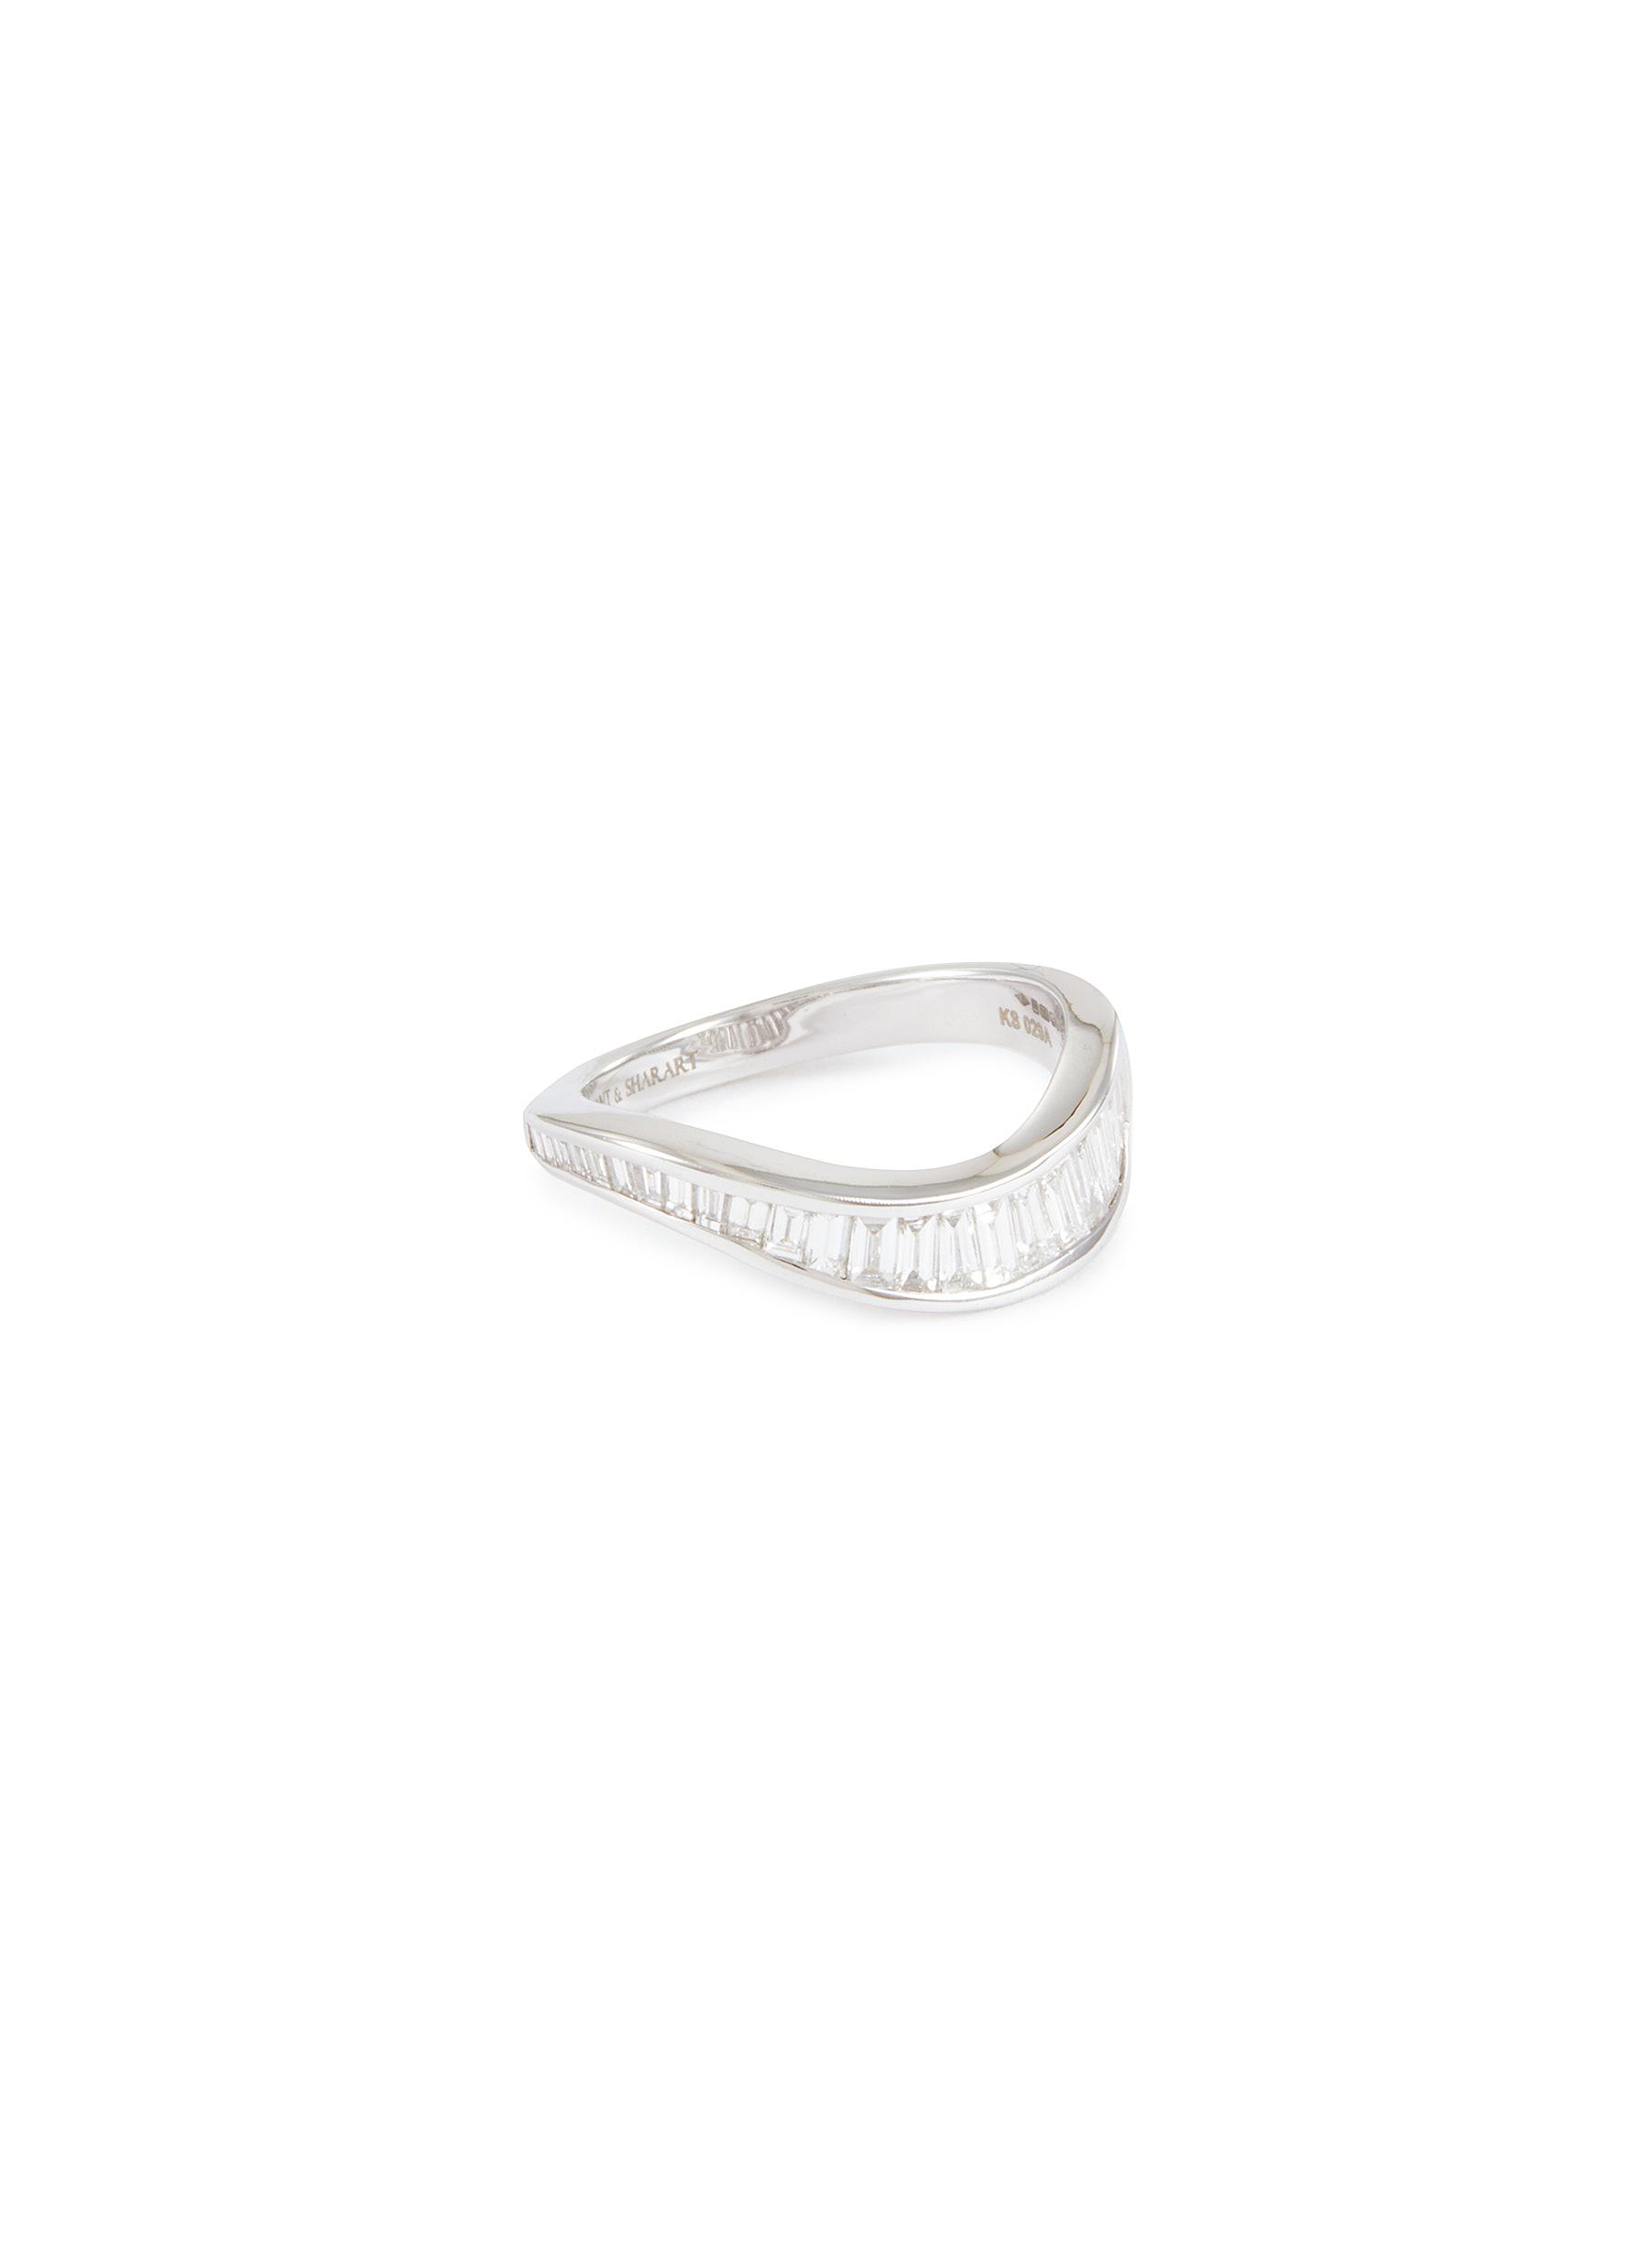 KAVANT & SHARART ‘Talay' Baguette Cut Diamond 18K White Gold Wave Ring